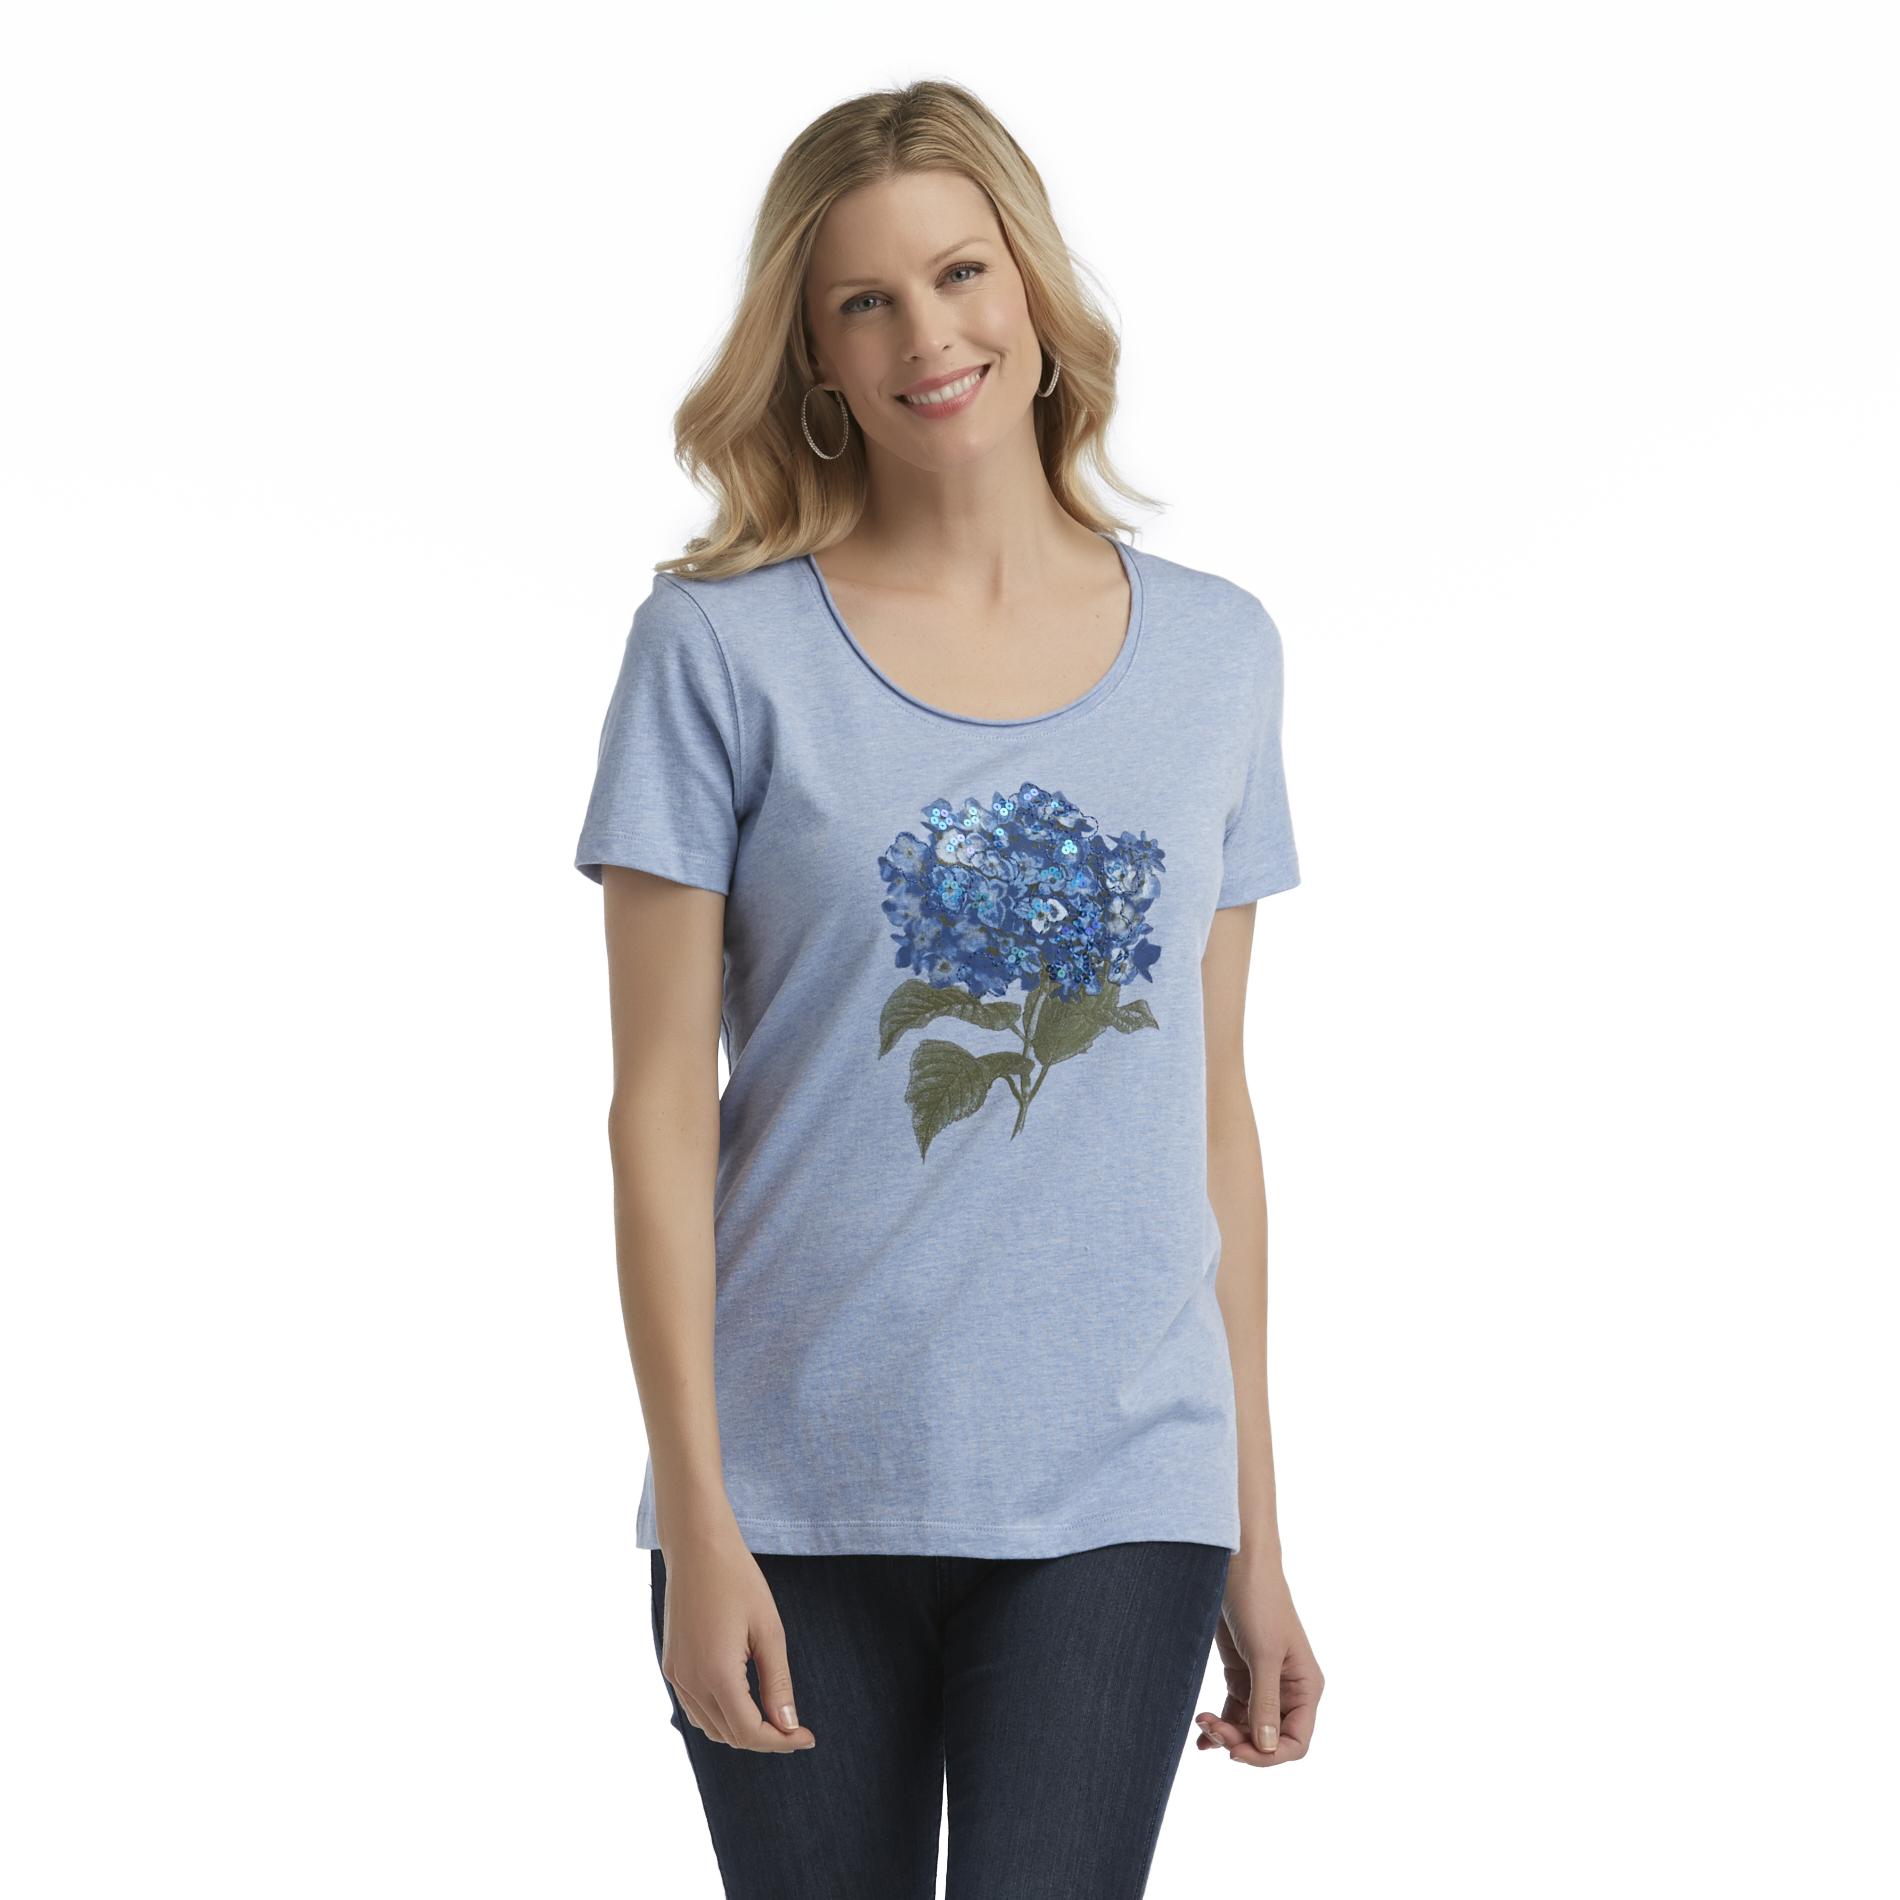 Laura Scott Women's Graphic T-Shirt - Floral